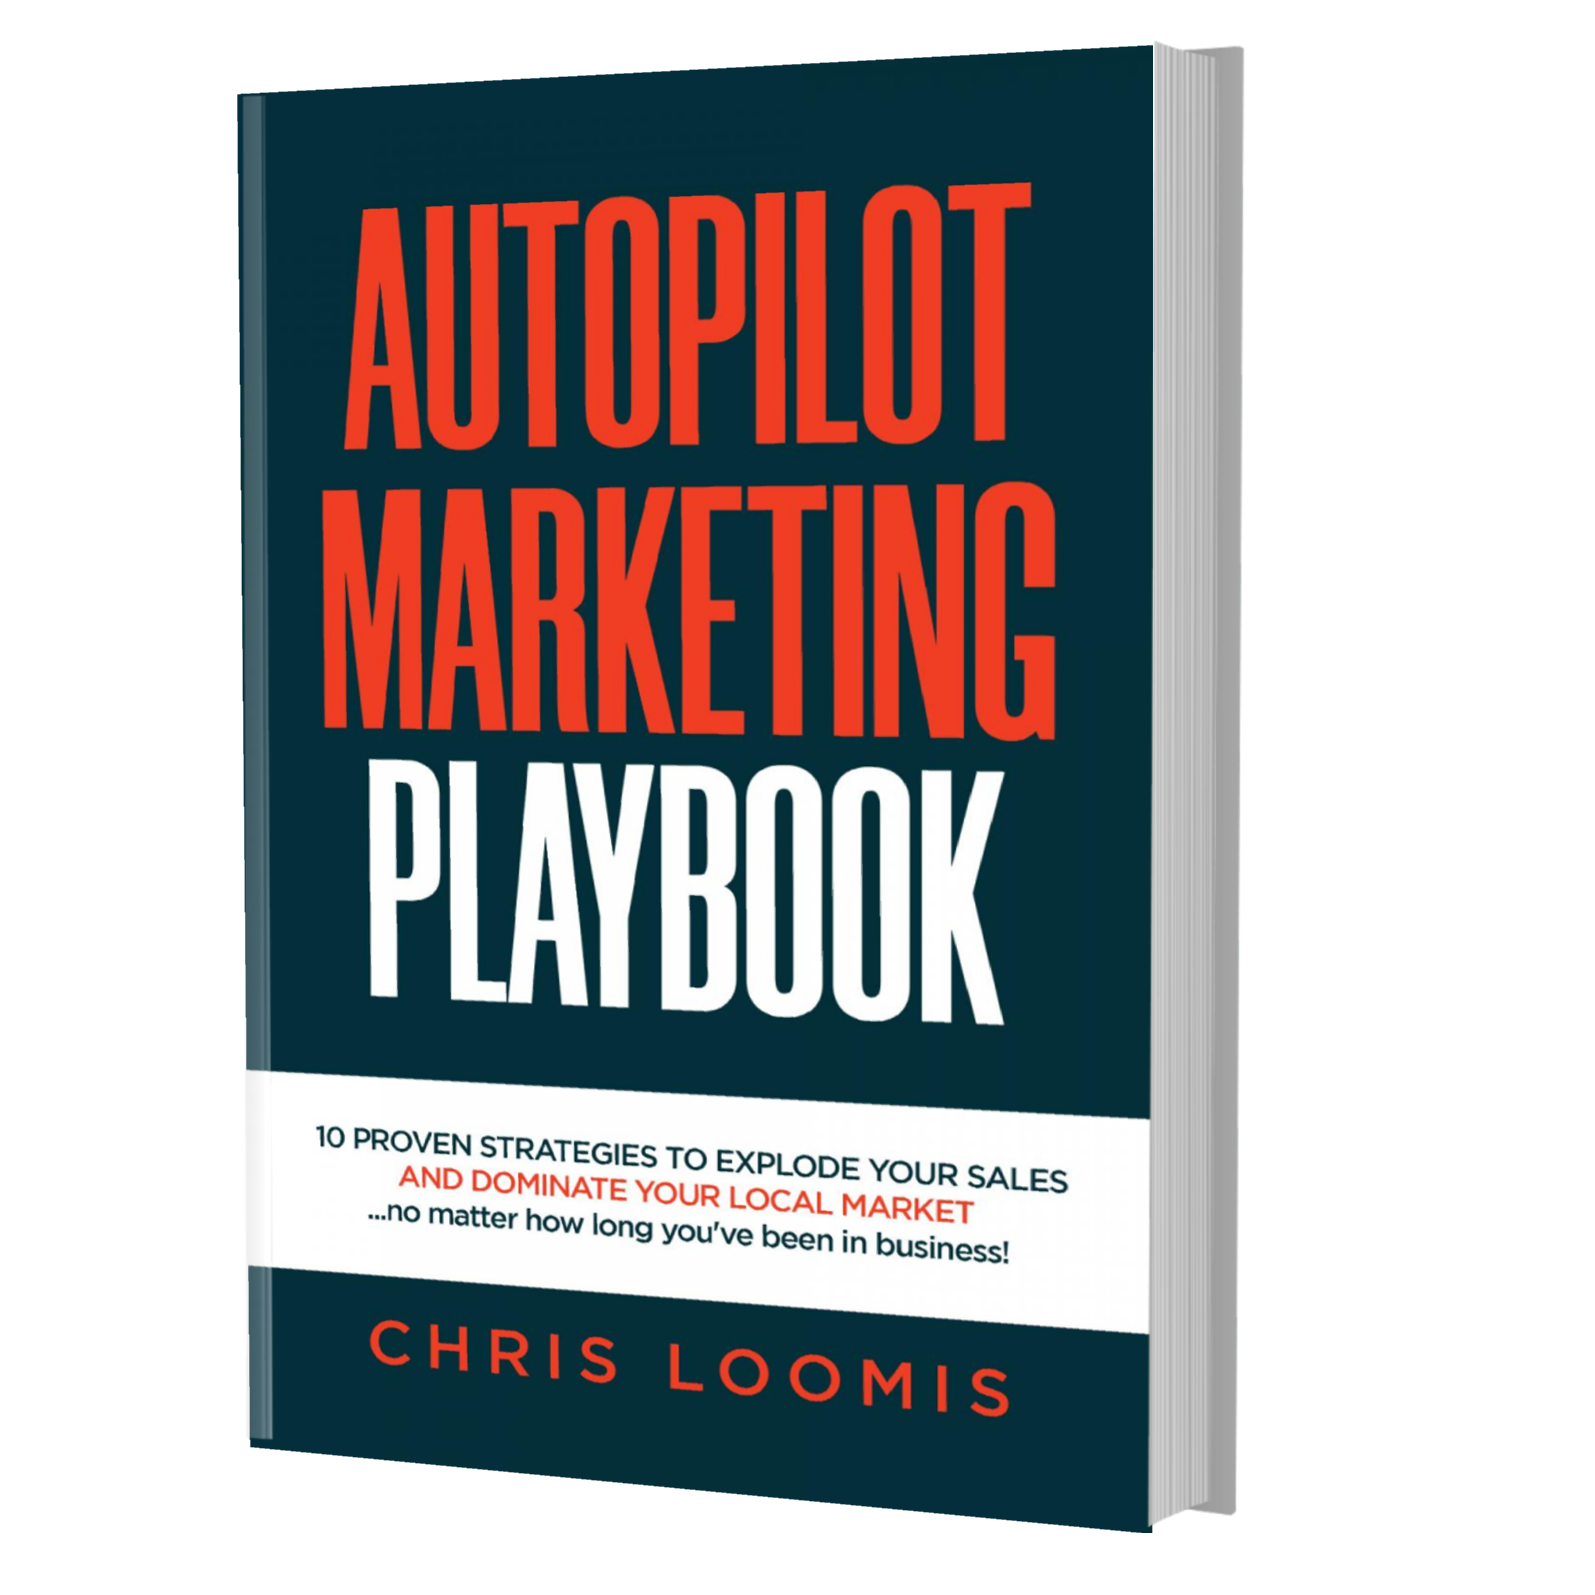 Autopilot Marketing Playbook